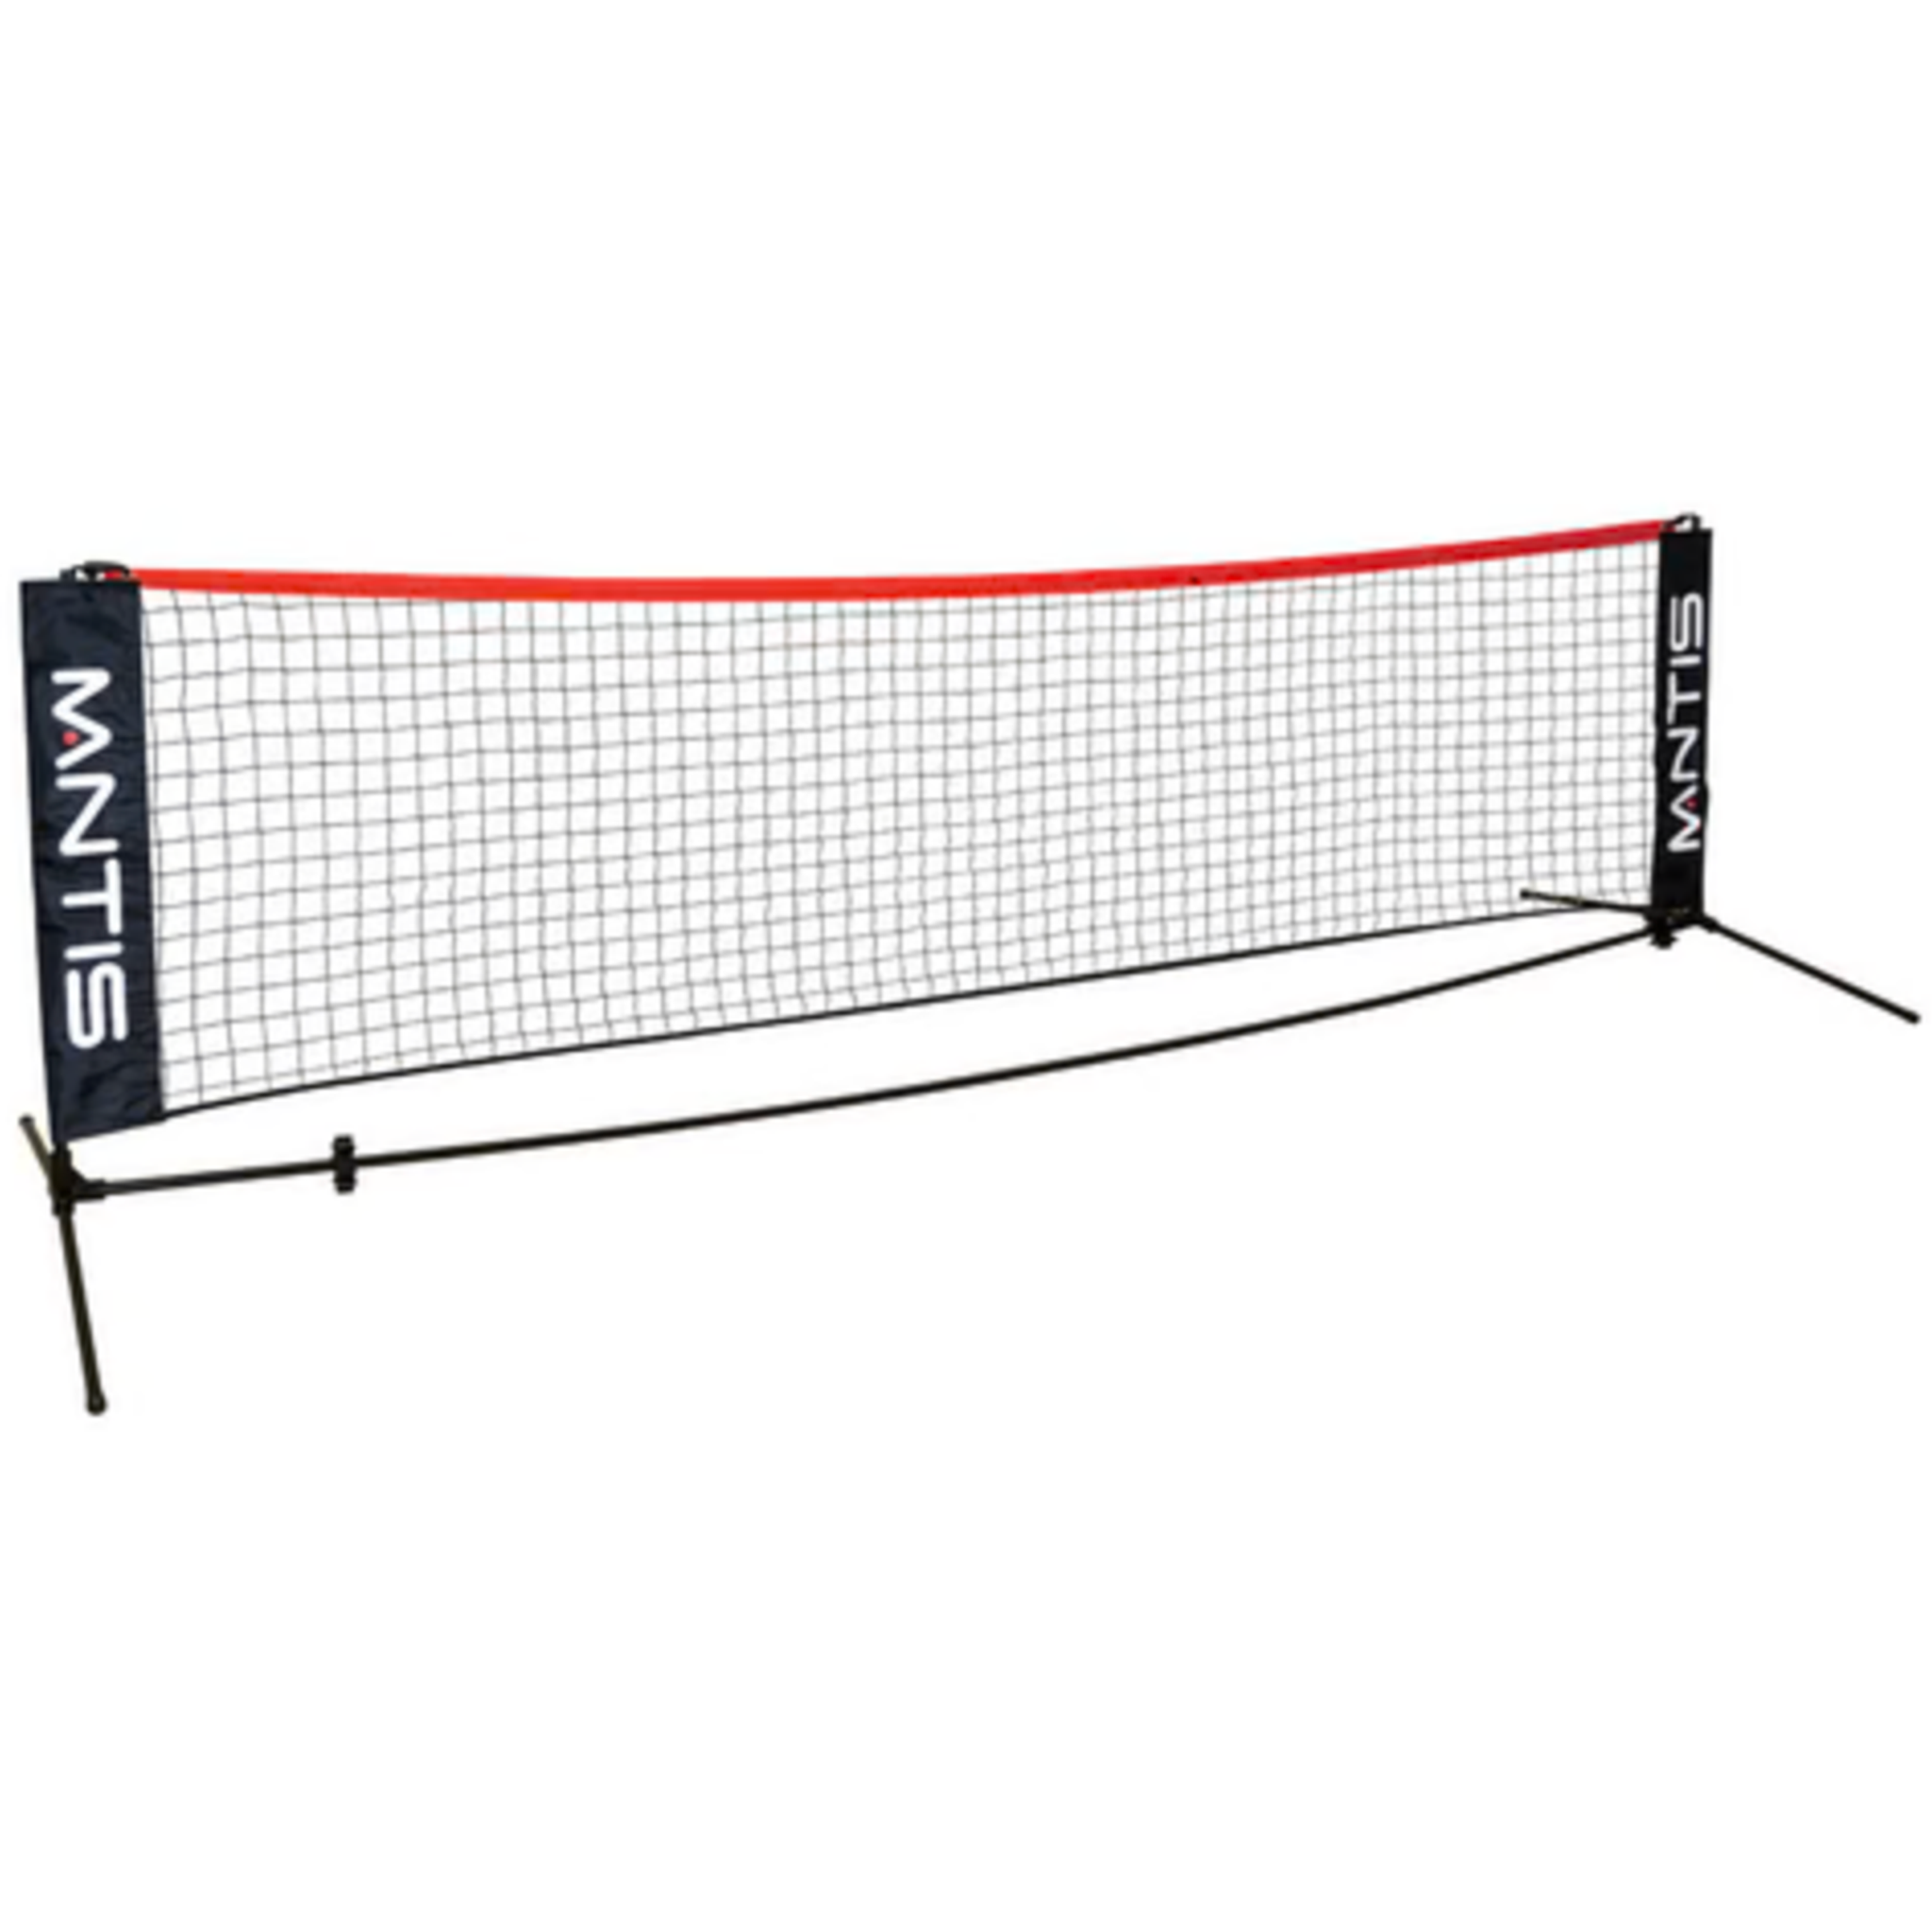 MANTIS Mini Tennis / Badminton Net - 3m